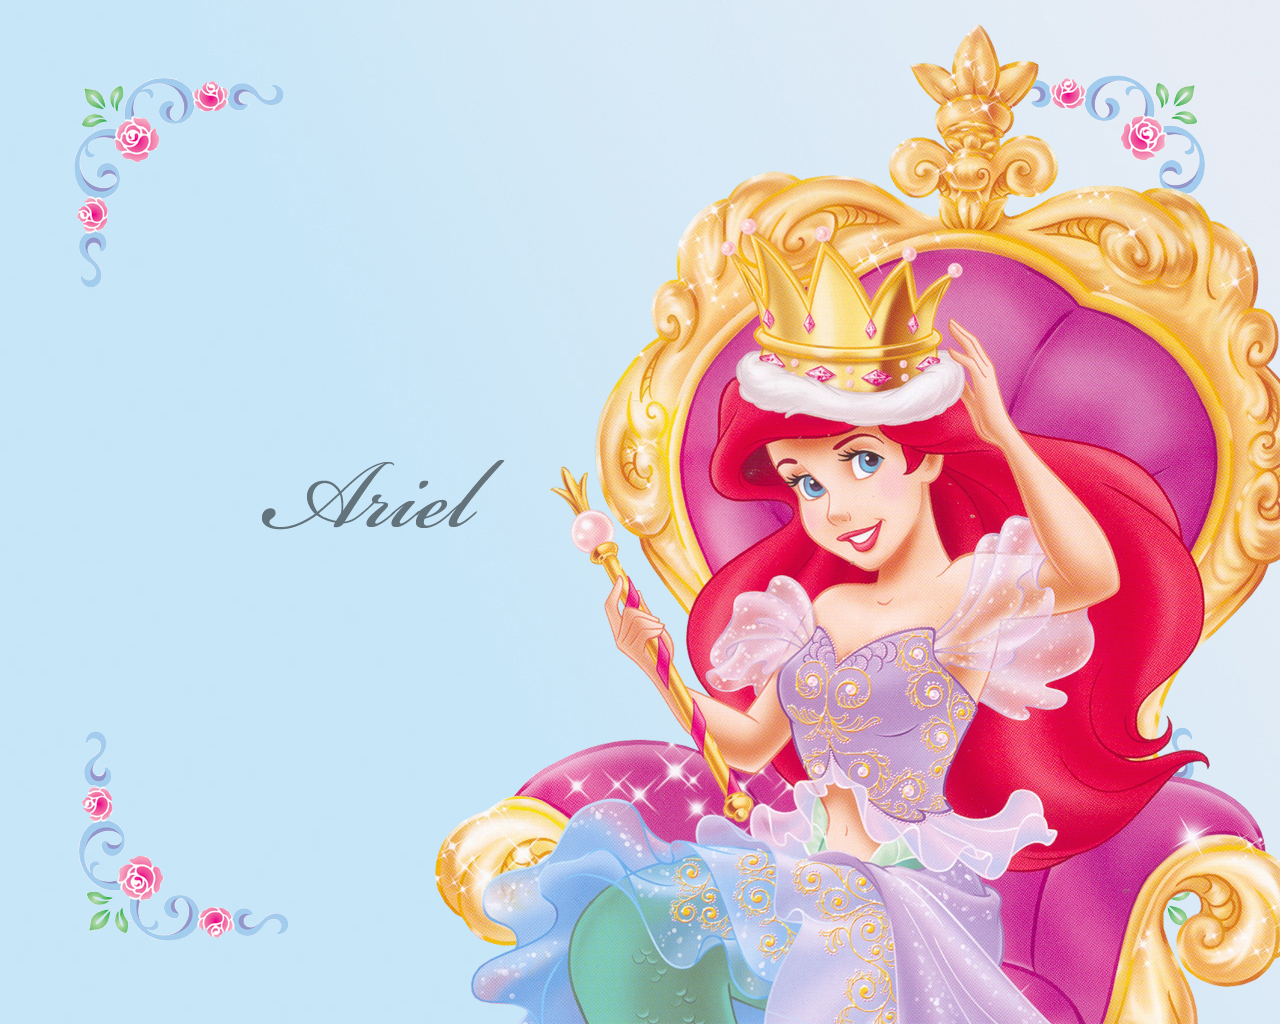 Disney Princess Wallpaper Pictures Image Desktop Background